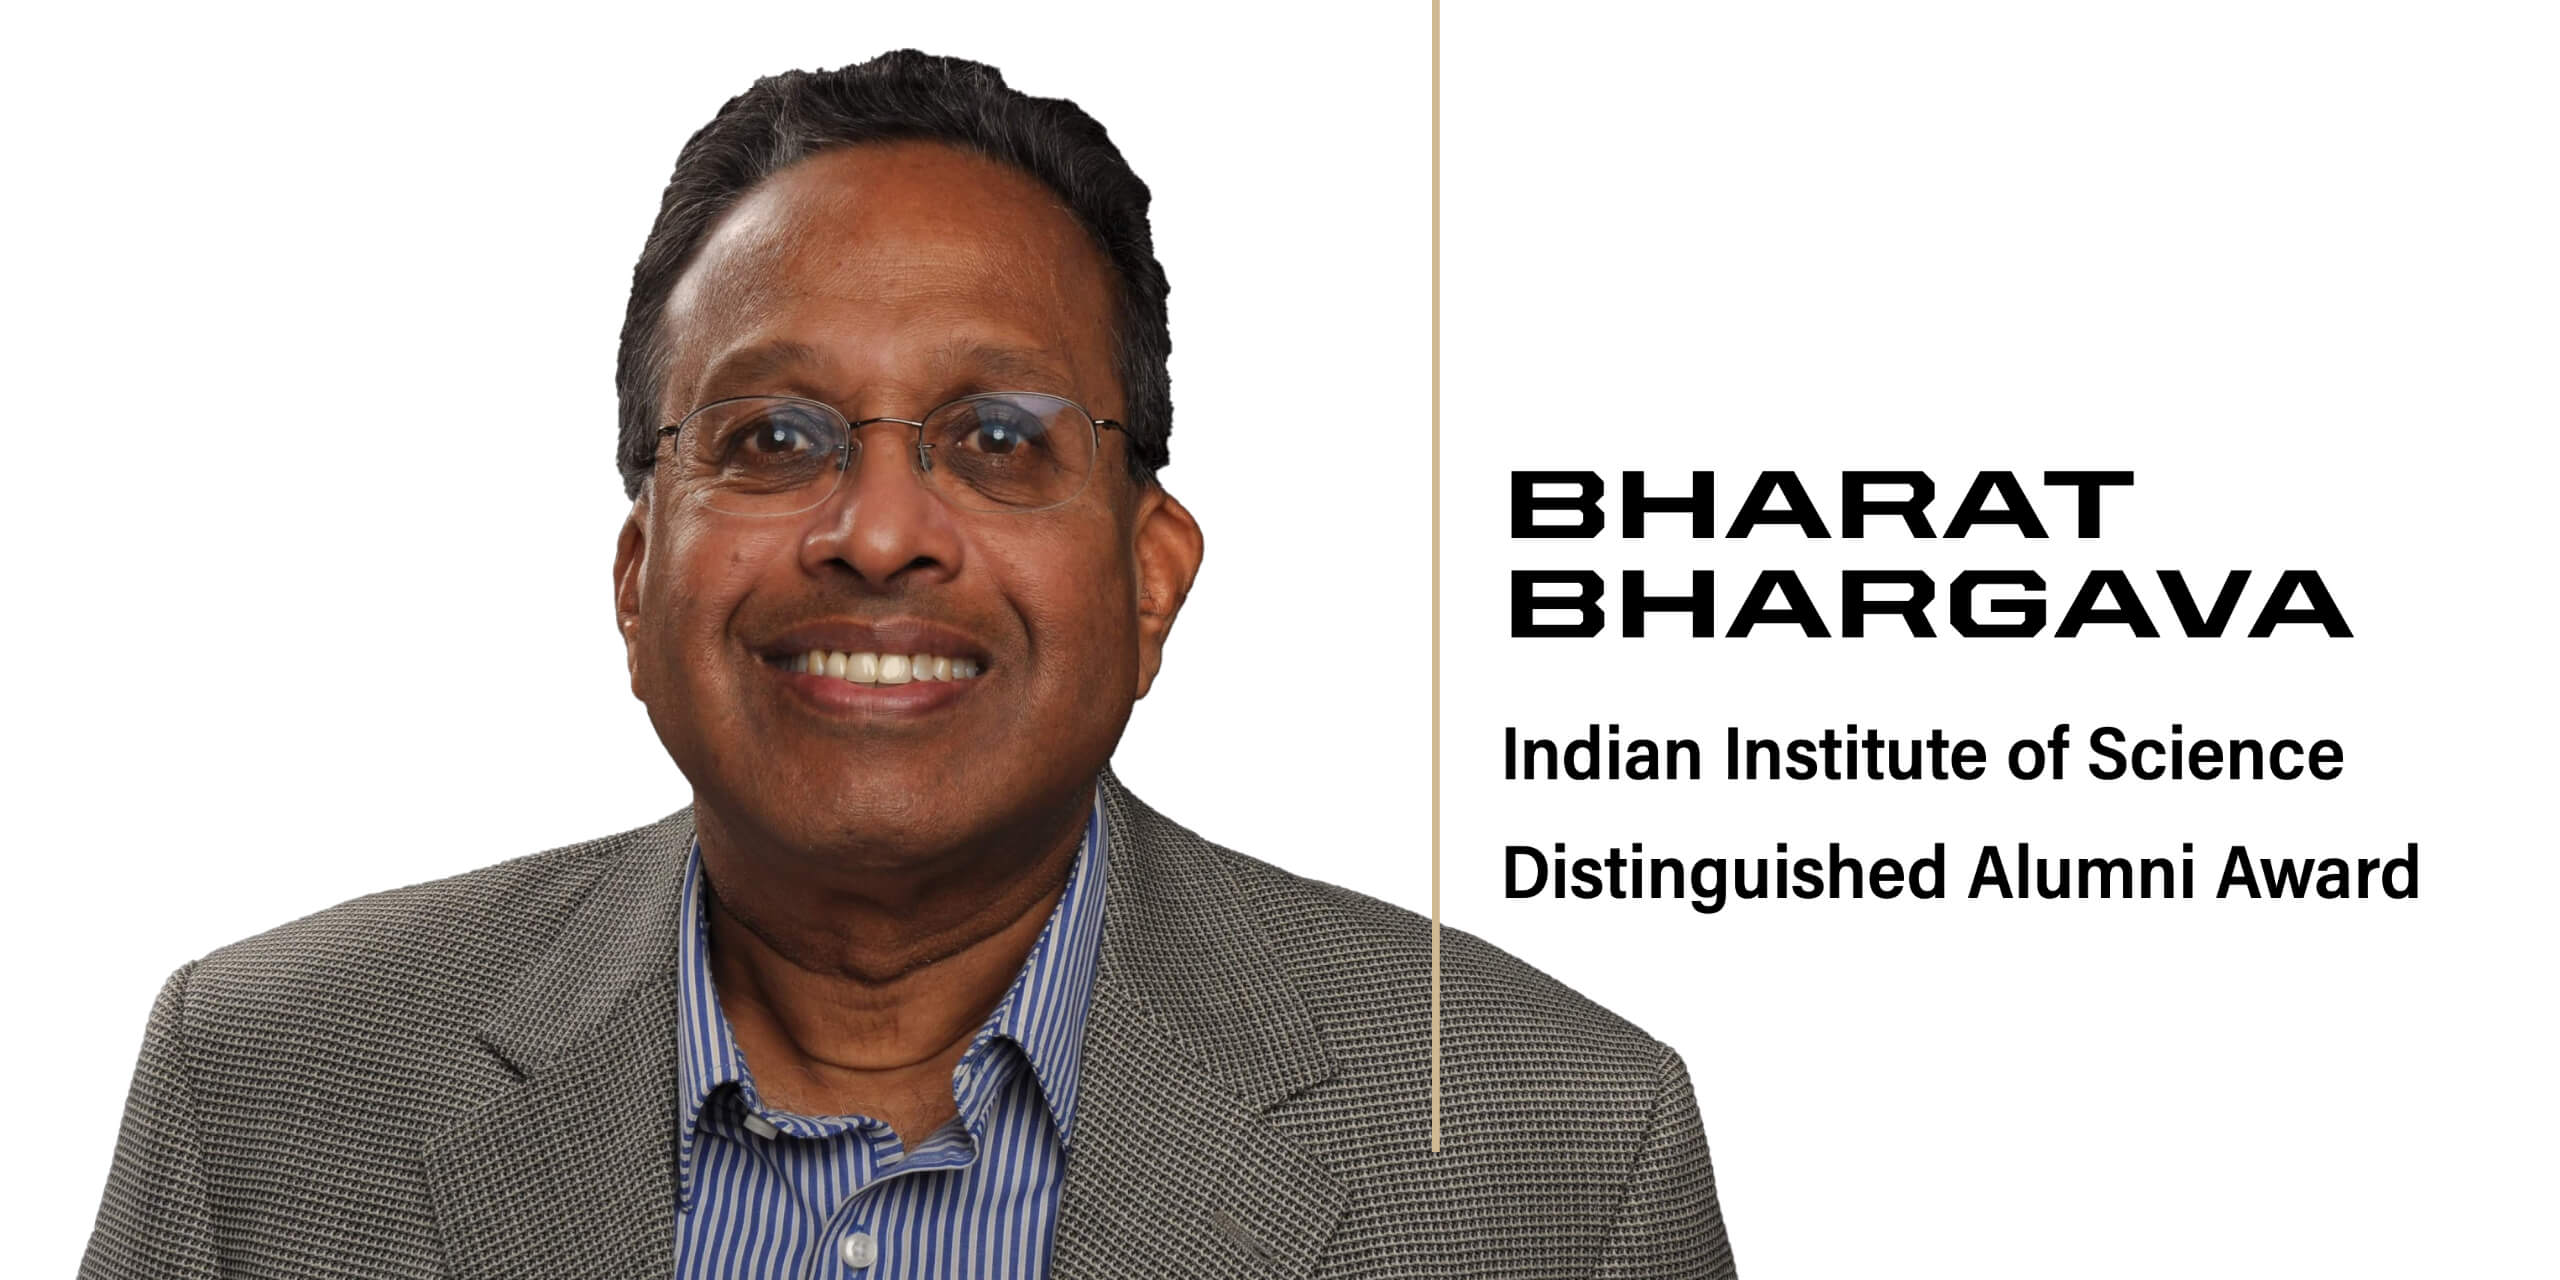 Professor Bharat Bhargava